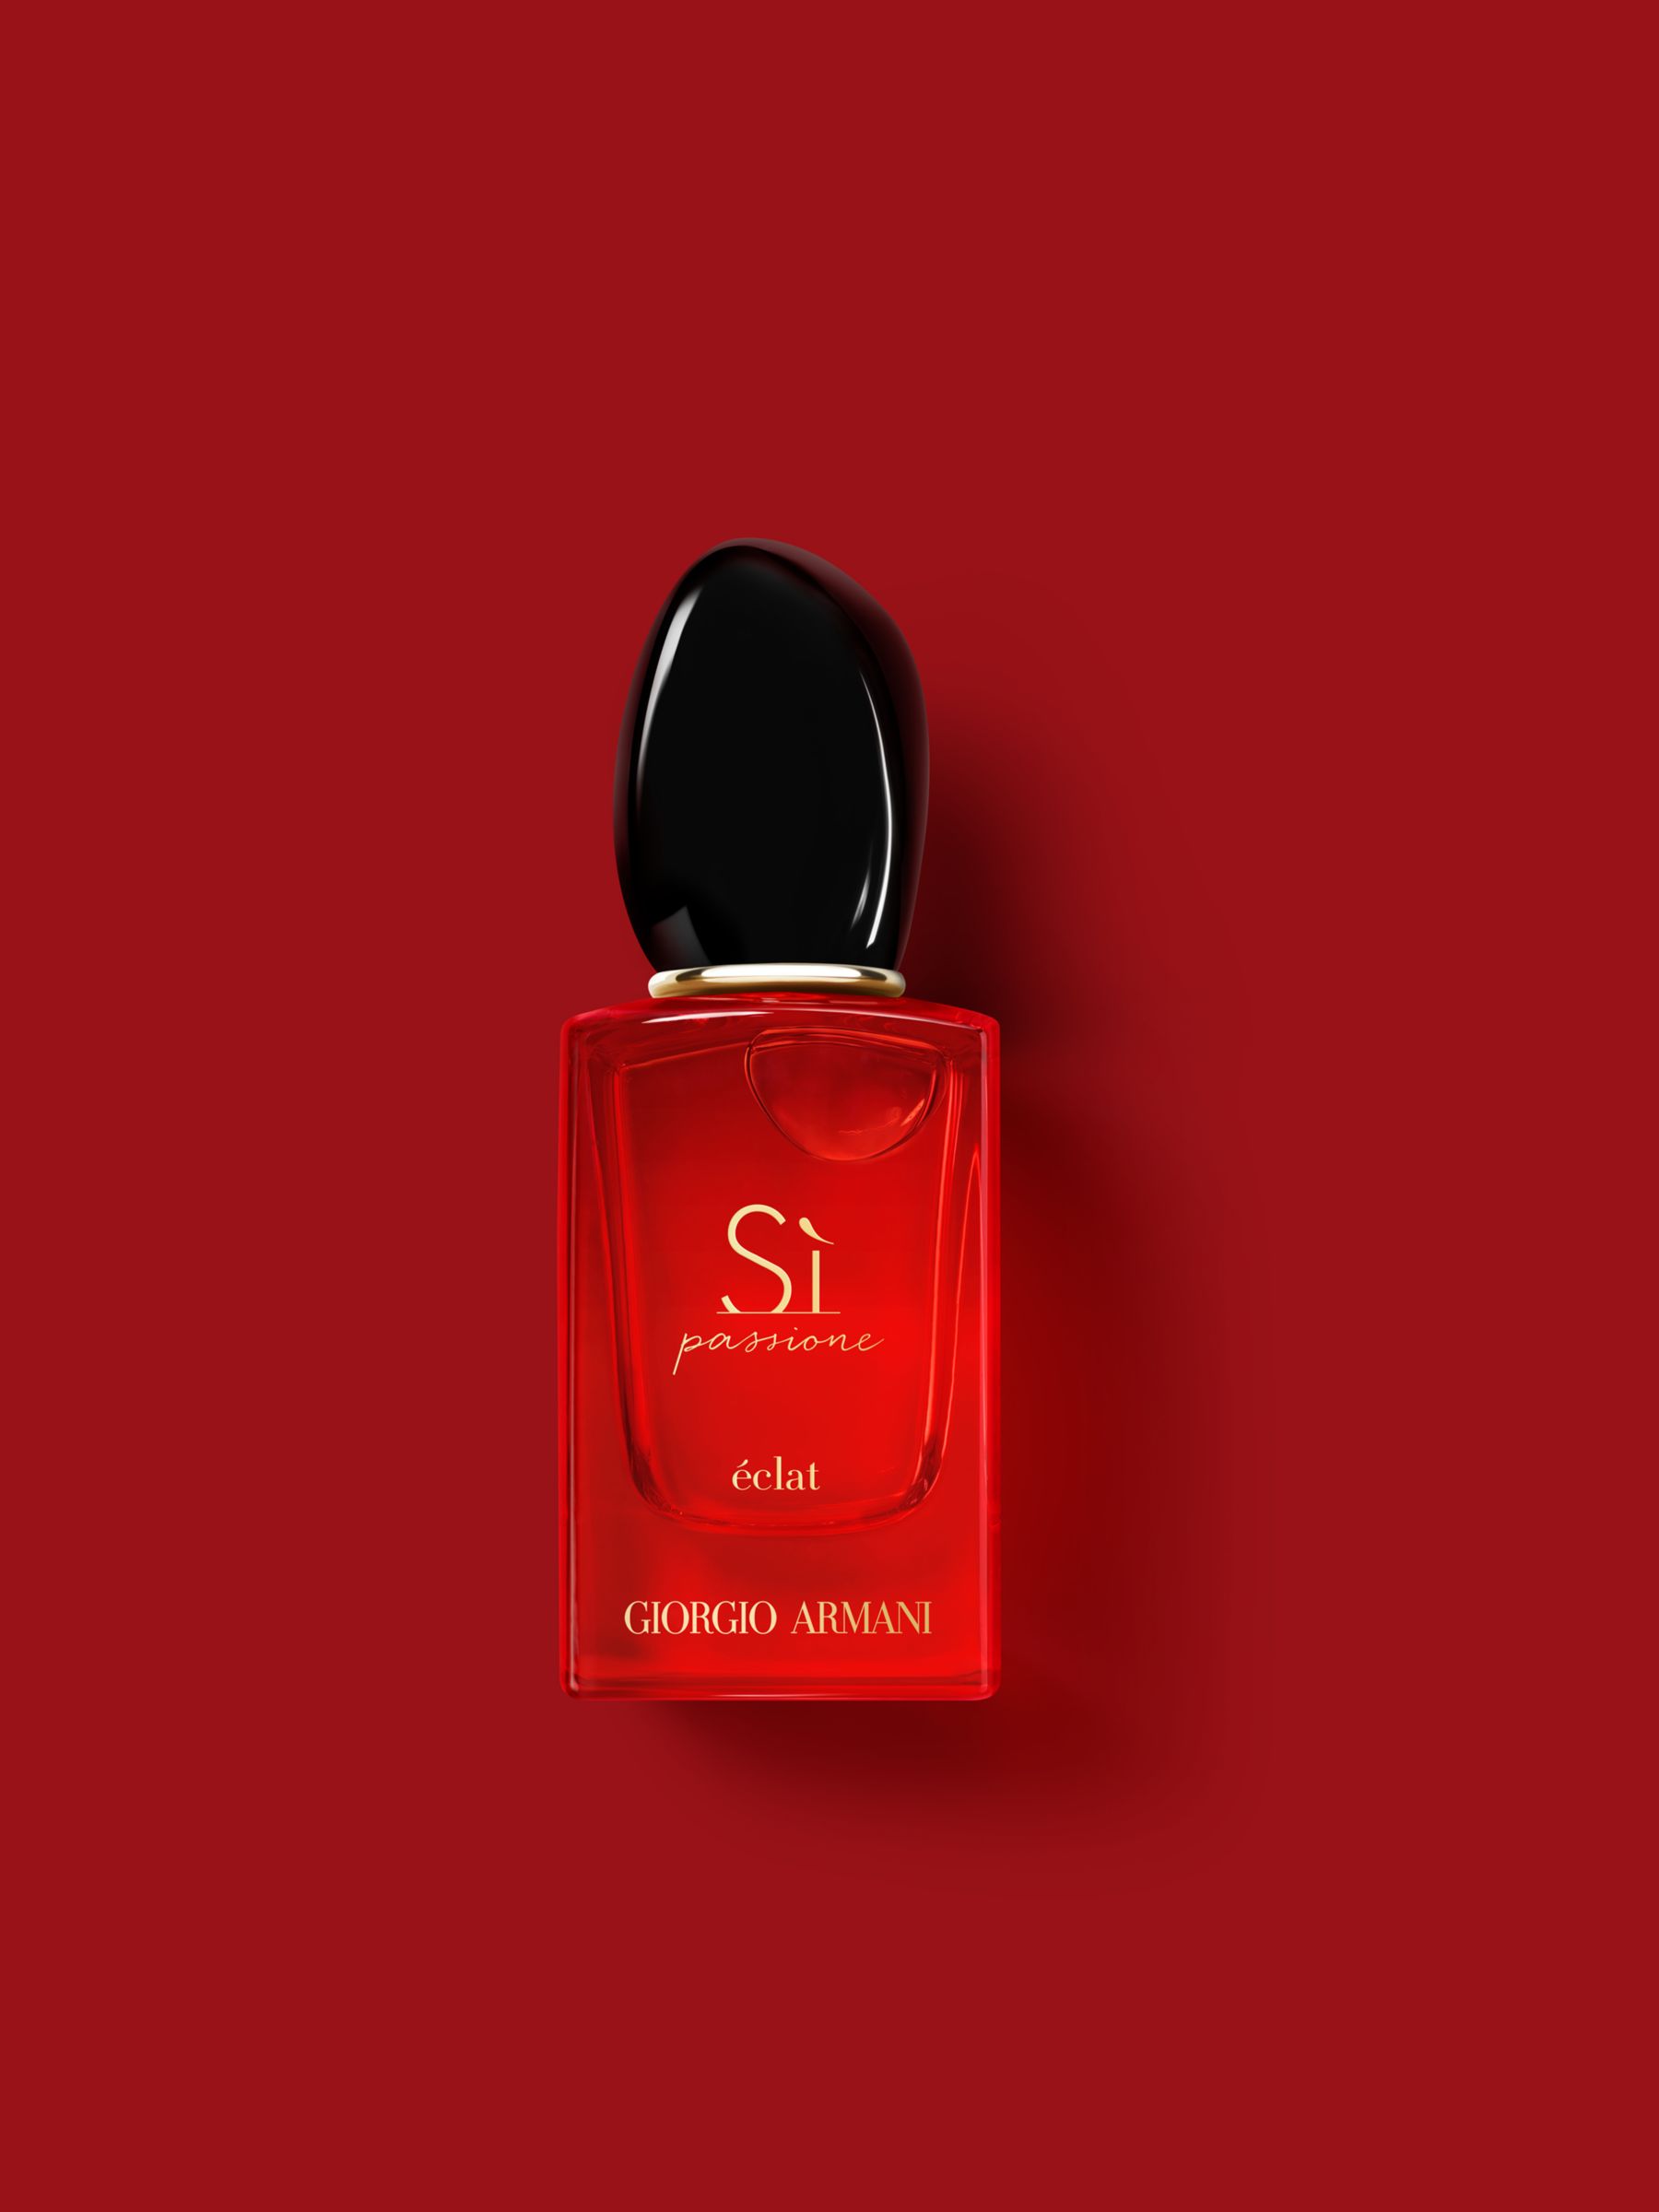 Giorgio Armani Si Passione Eclat Eau de Parfum, 30ml 3